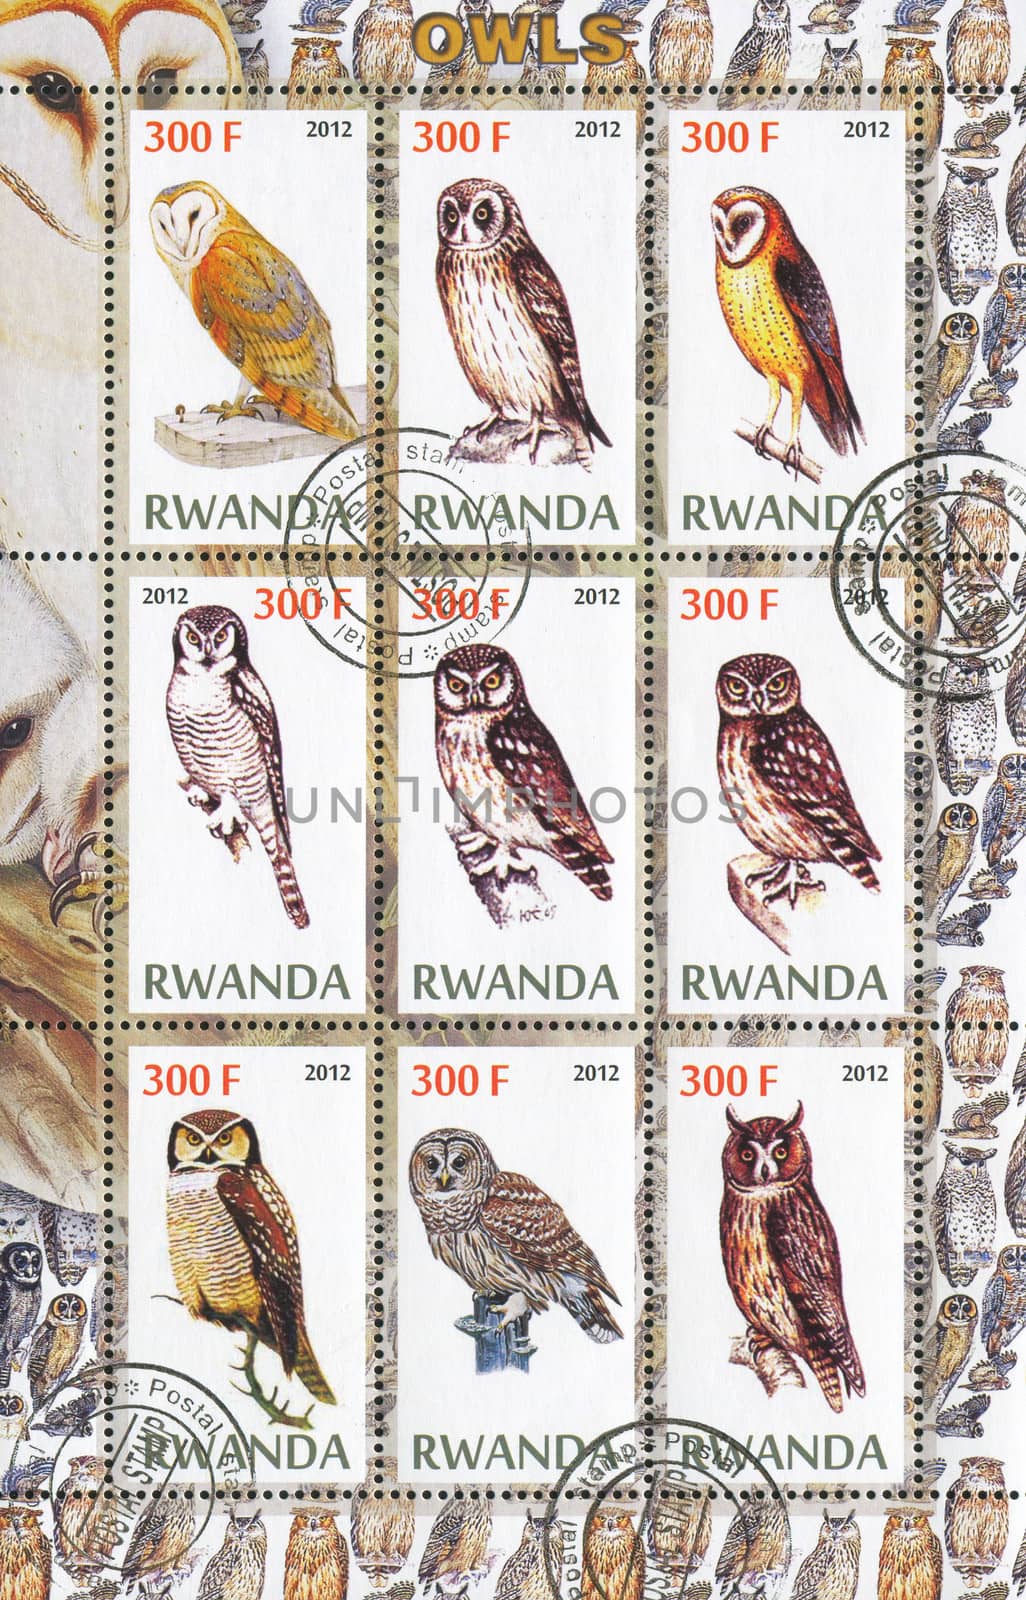 RWANDA - CIRCA 2012: stamp printed by Rwanda, shows Owl, circa 2012